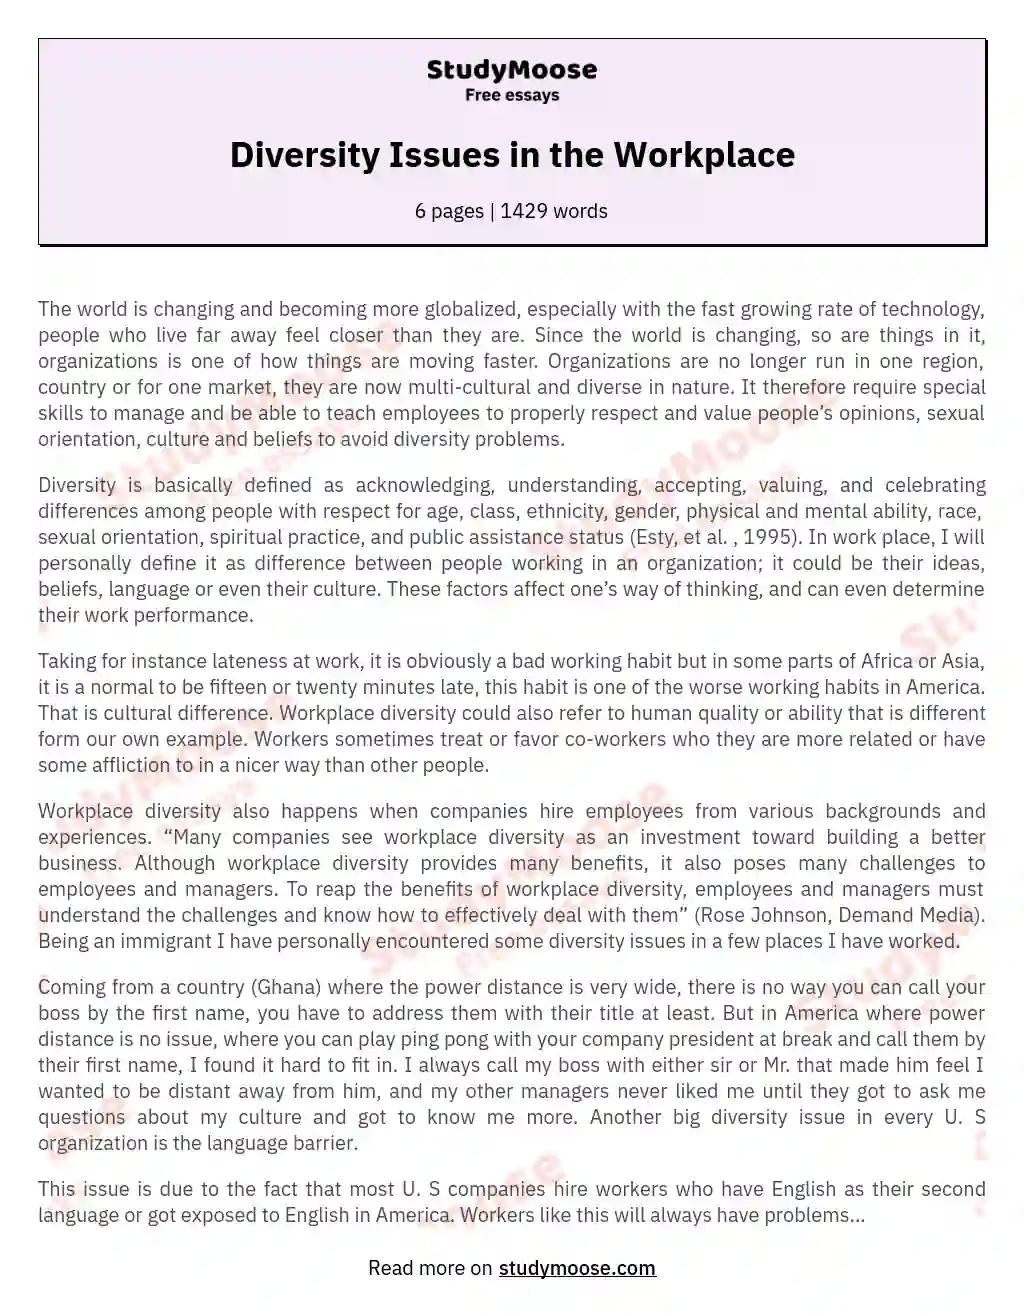 supplemental essay about diversity